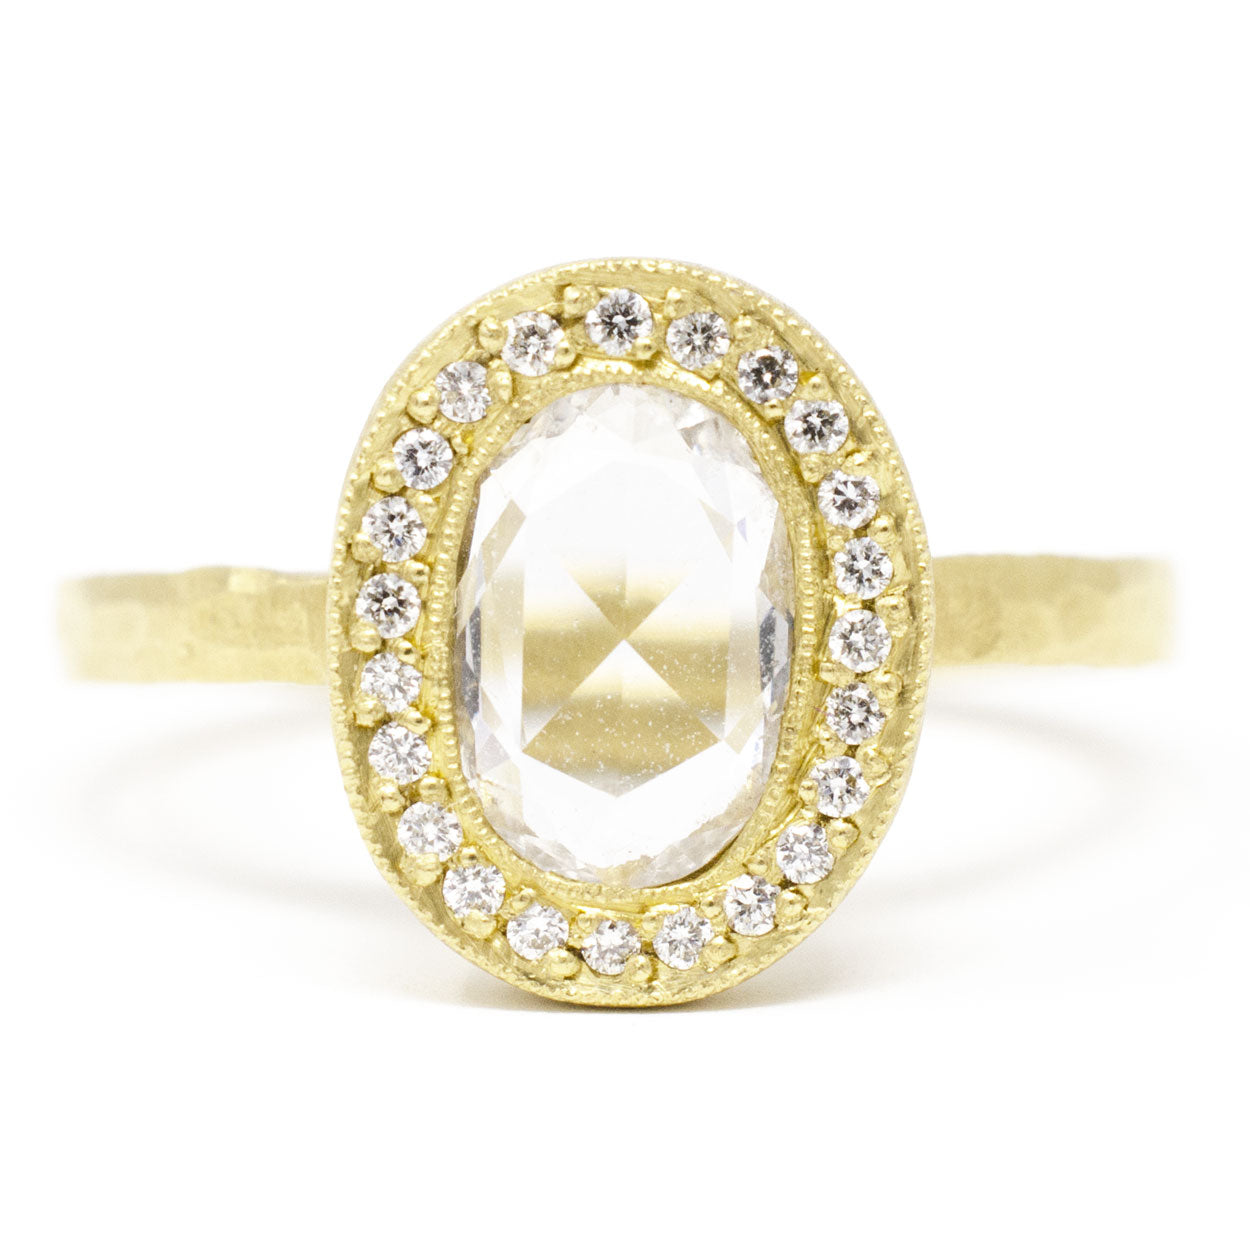 Buy Proposal Diamond Ring Online in India | Kasturi Diamond